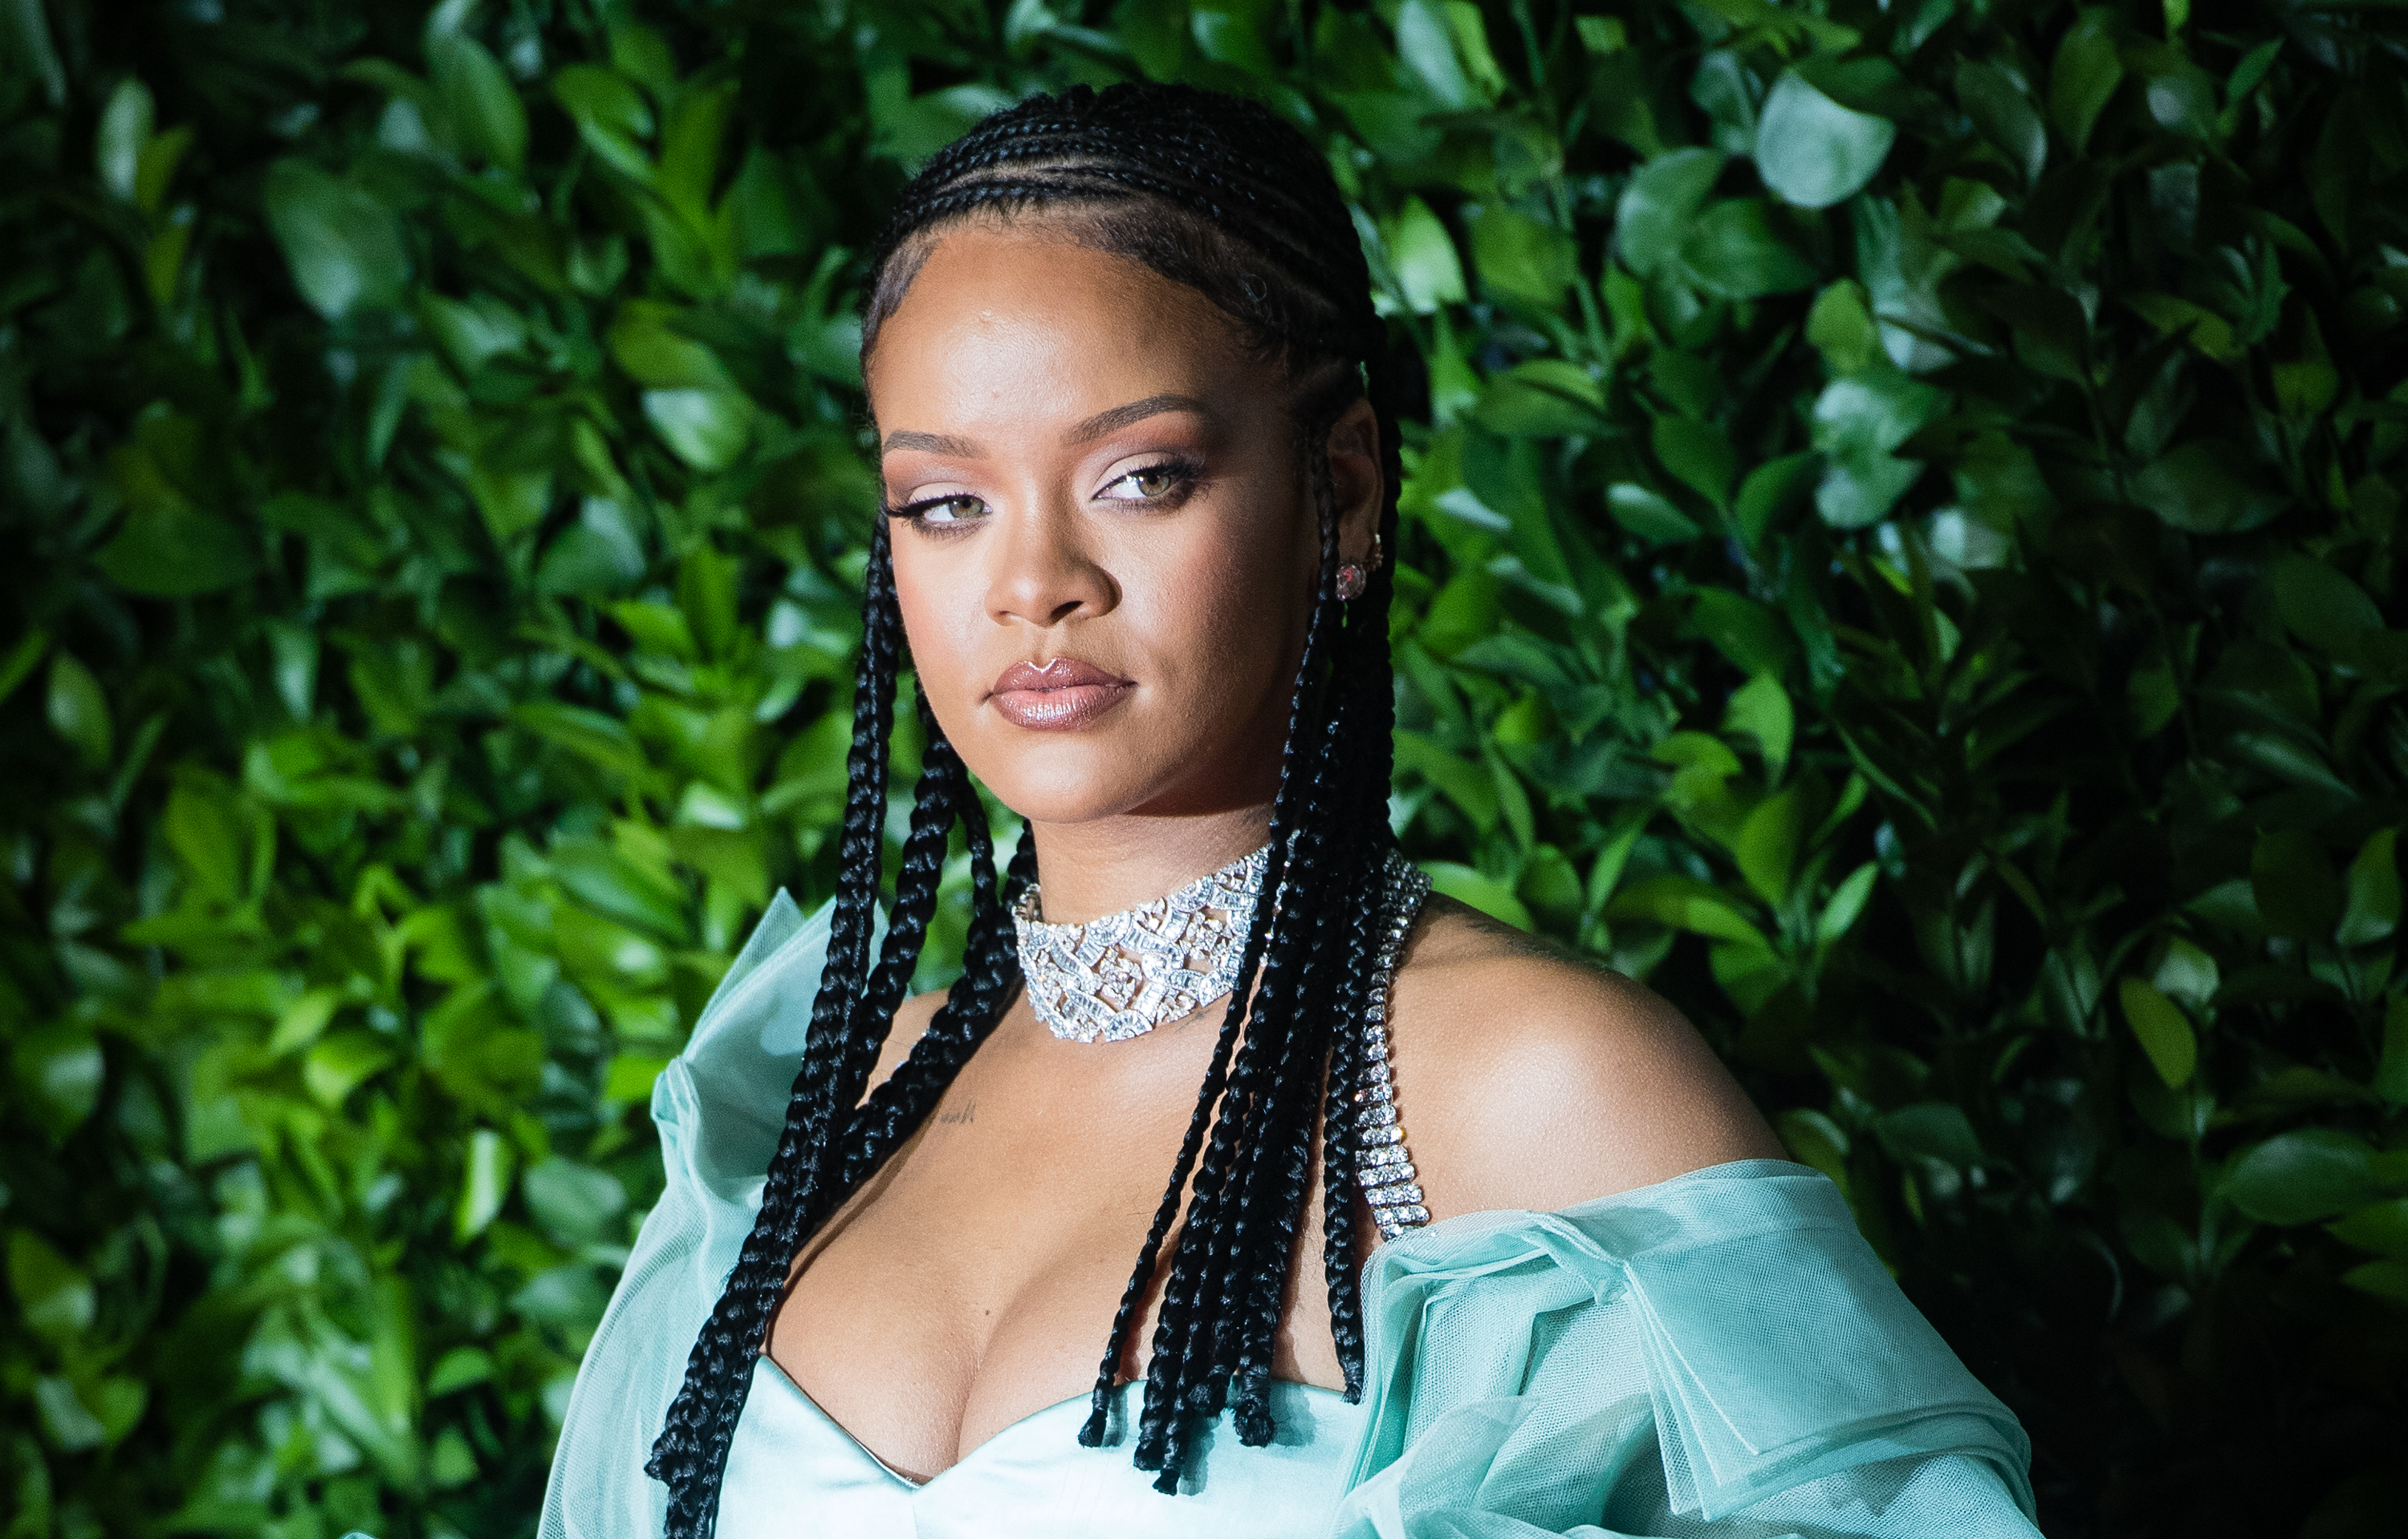 Rihanna poses for a photo as she arrives at The Fashion Awards